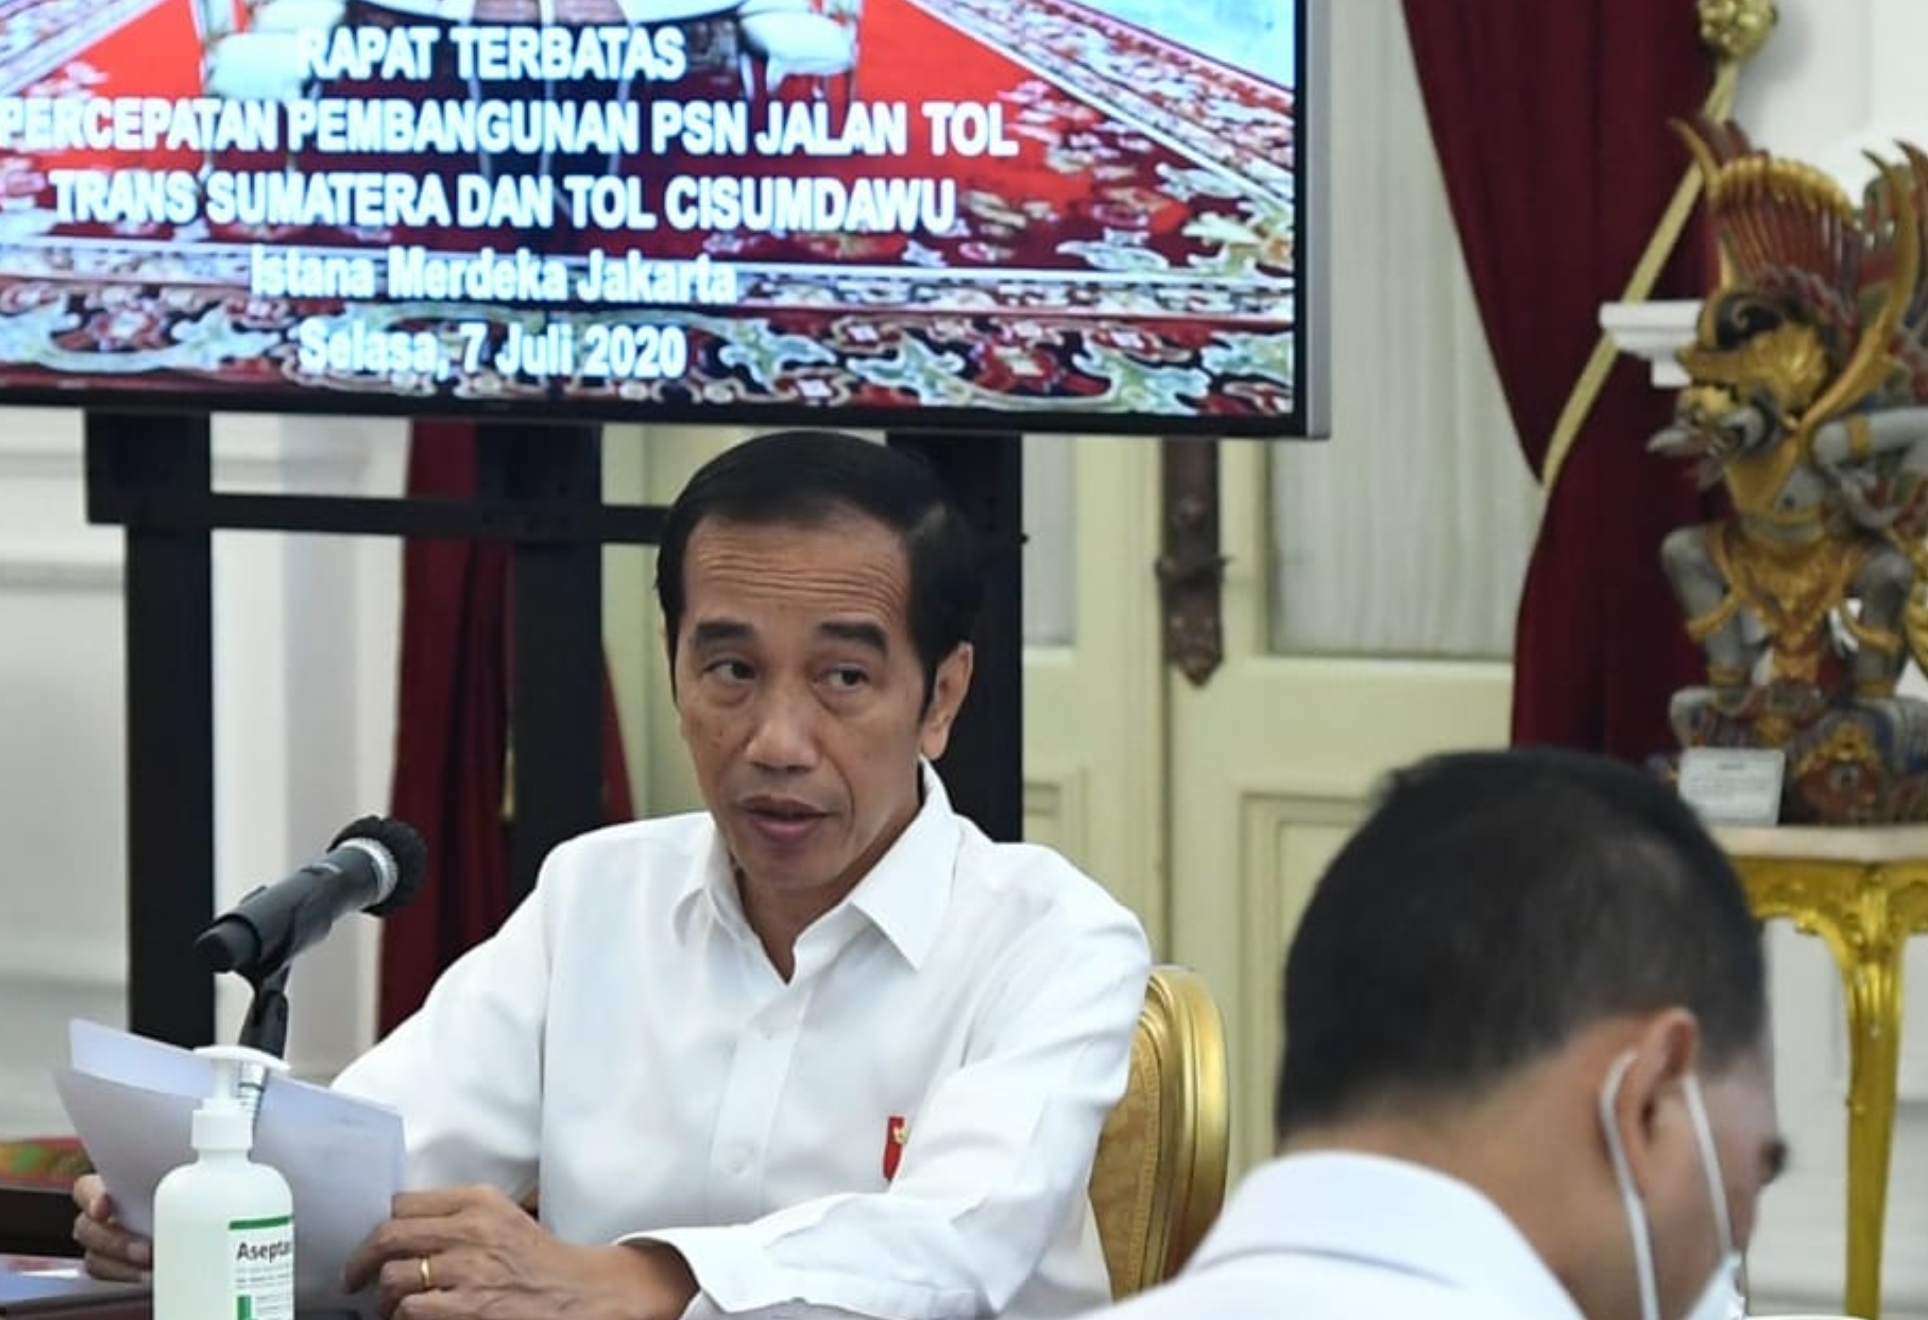 TOL CISUMDAWU akan Diresmikan Presiden Jokowi Bareng dengan Masjid Al Jabbar, Tapi Belum Selesai